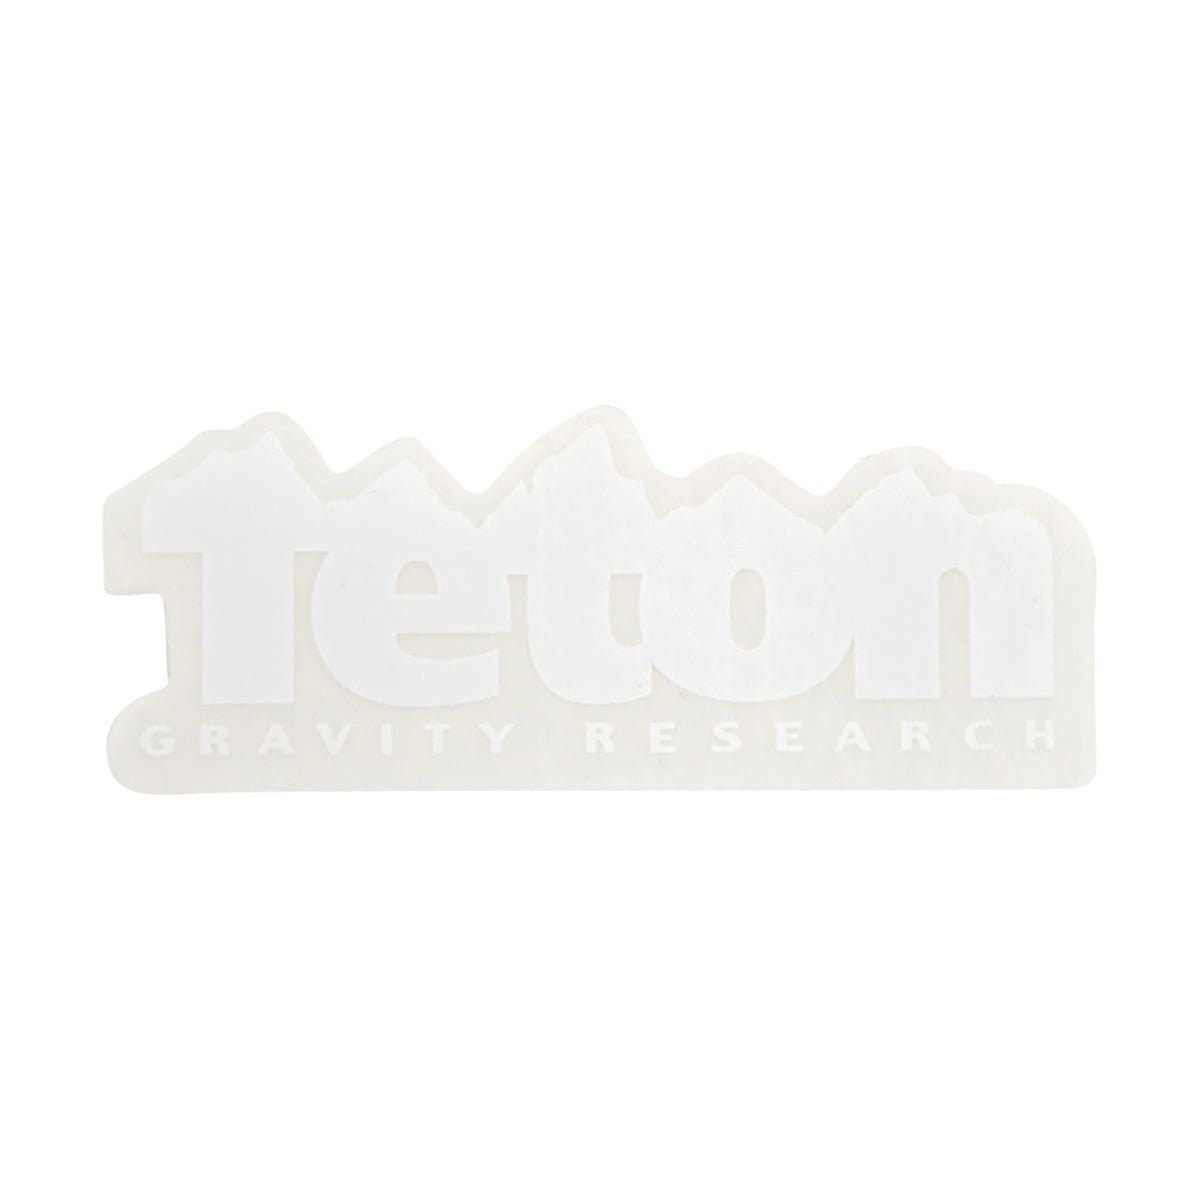 Helmet Sticker - Teton Gravity Research